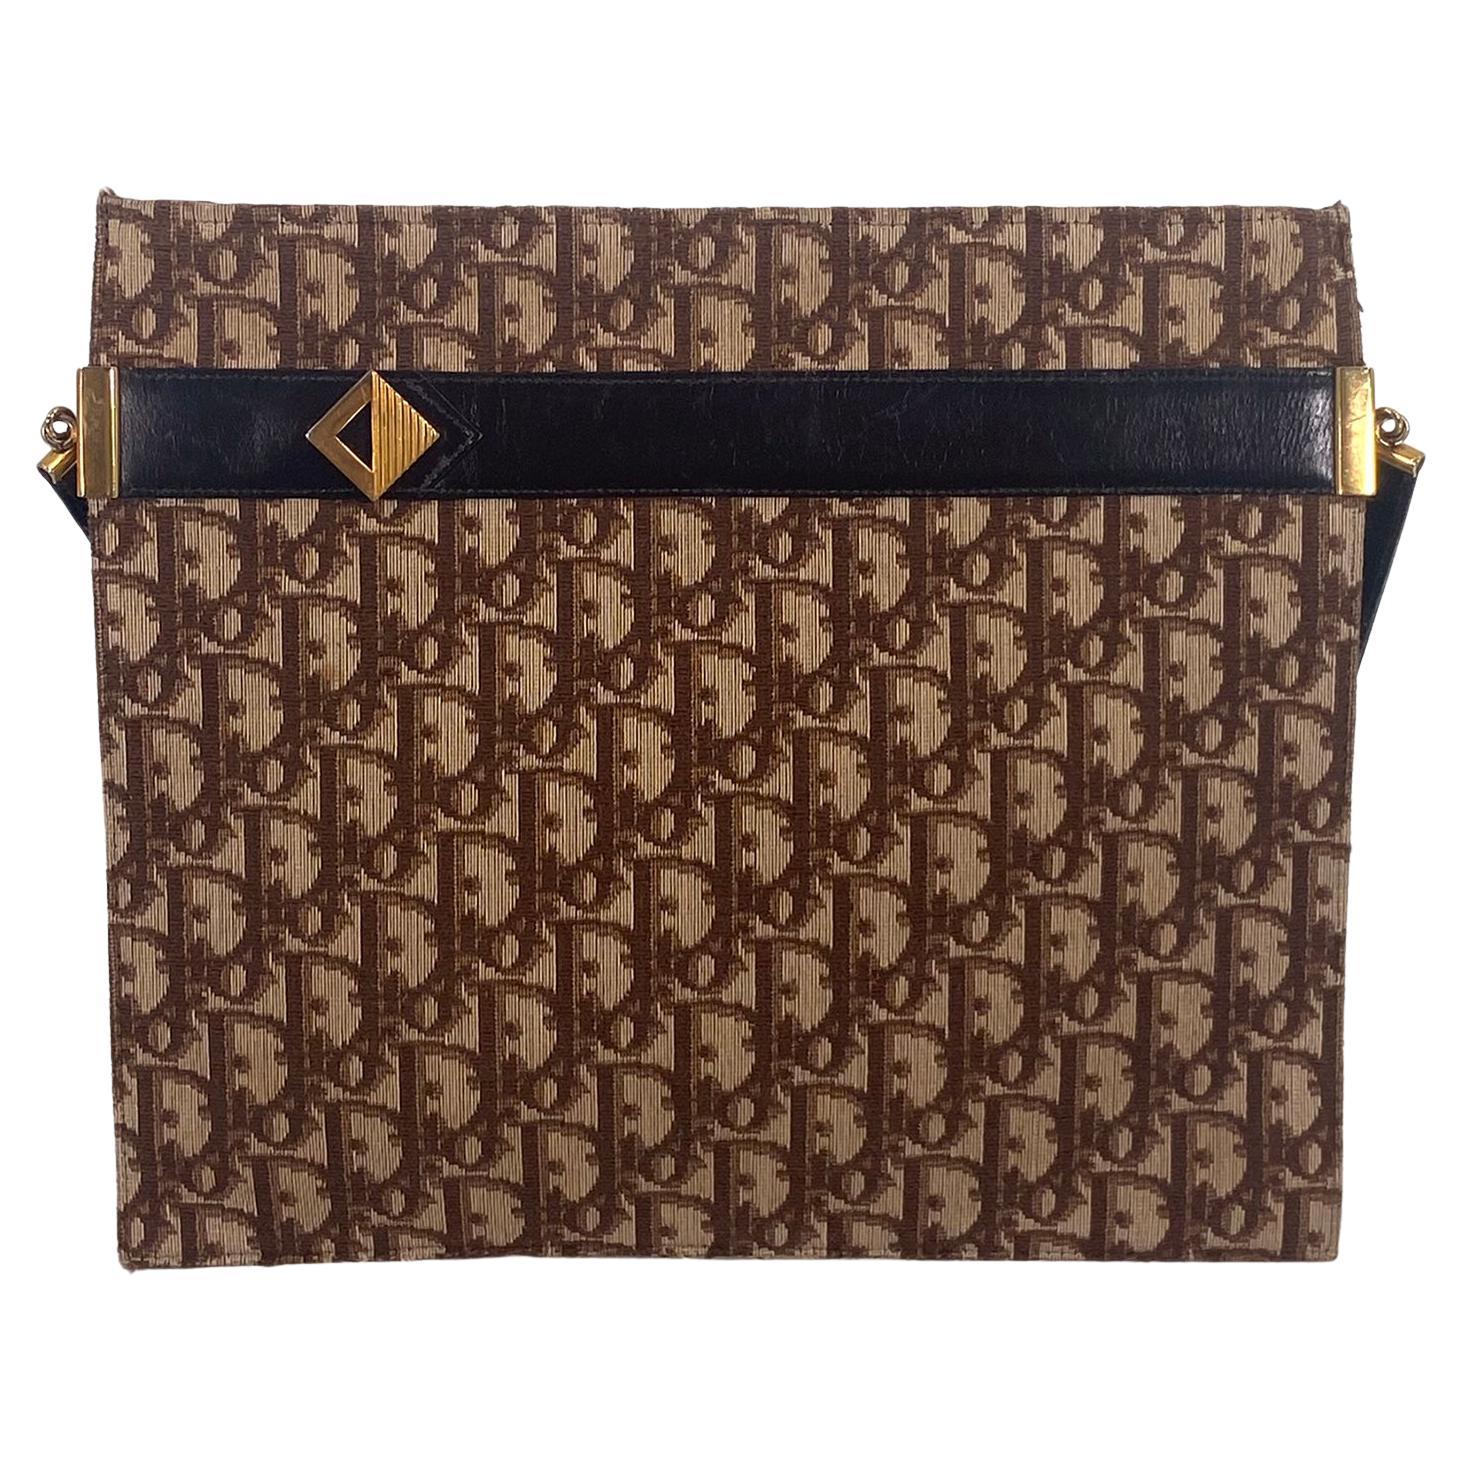 Christian Dior Brown Trotter Shoulder Bag with Rare Initial Applique Vintage 